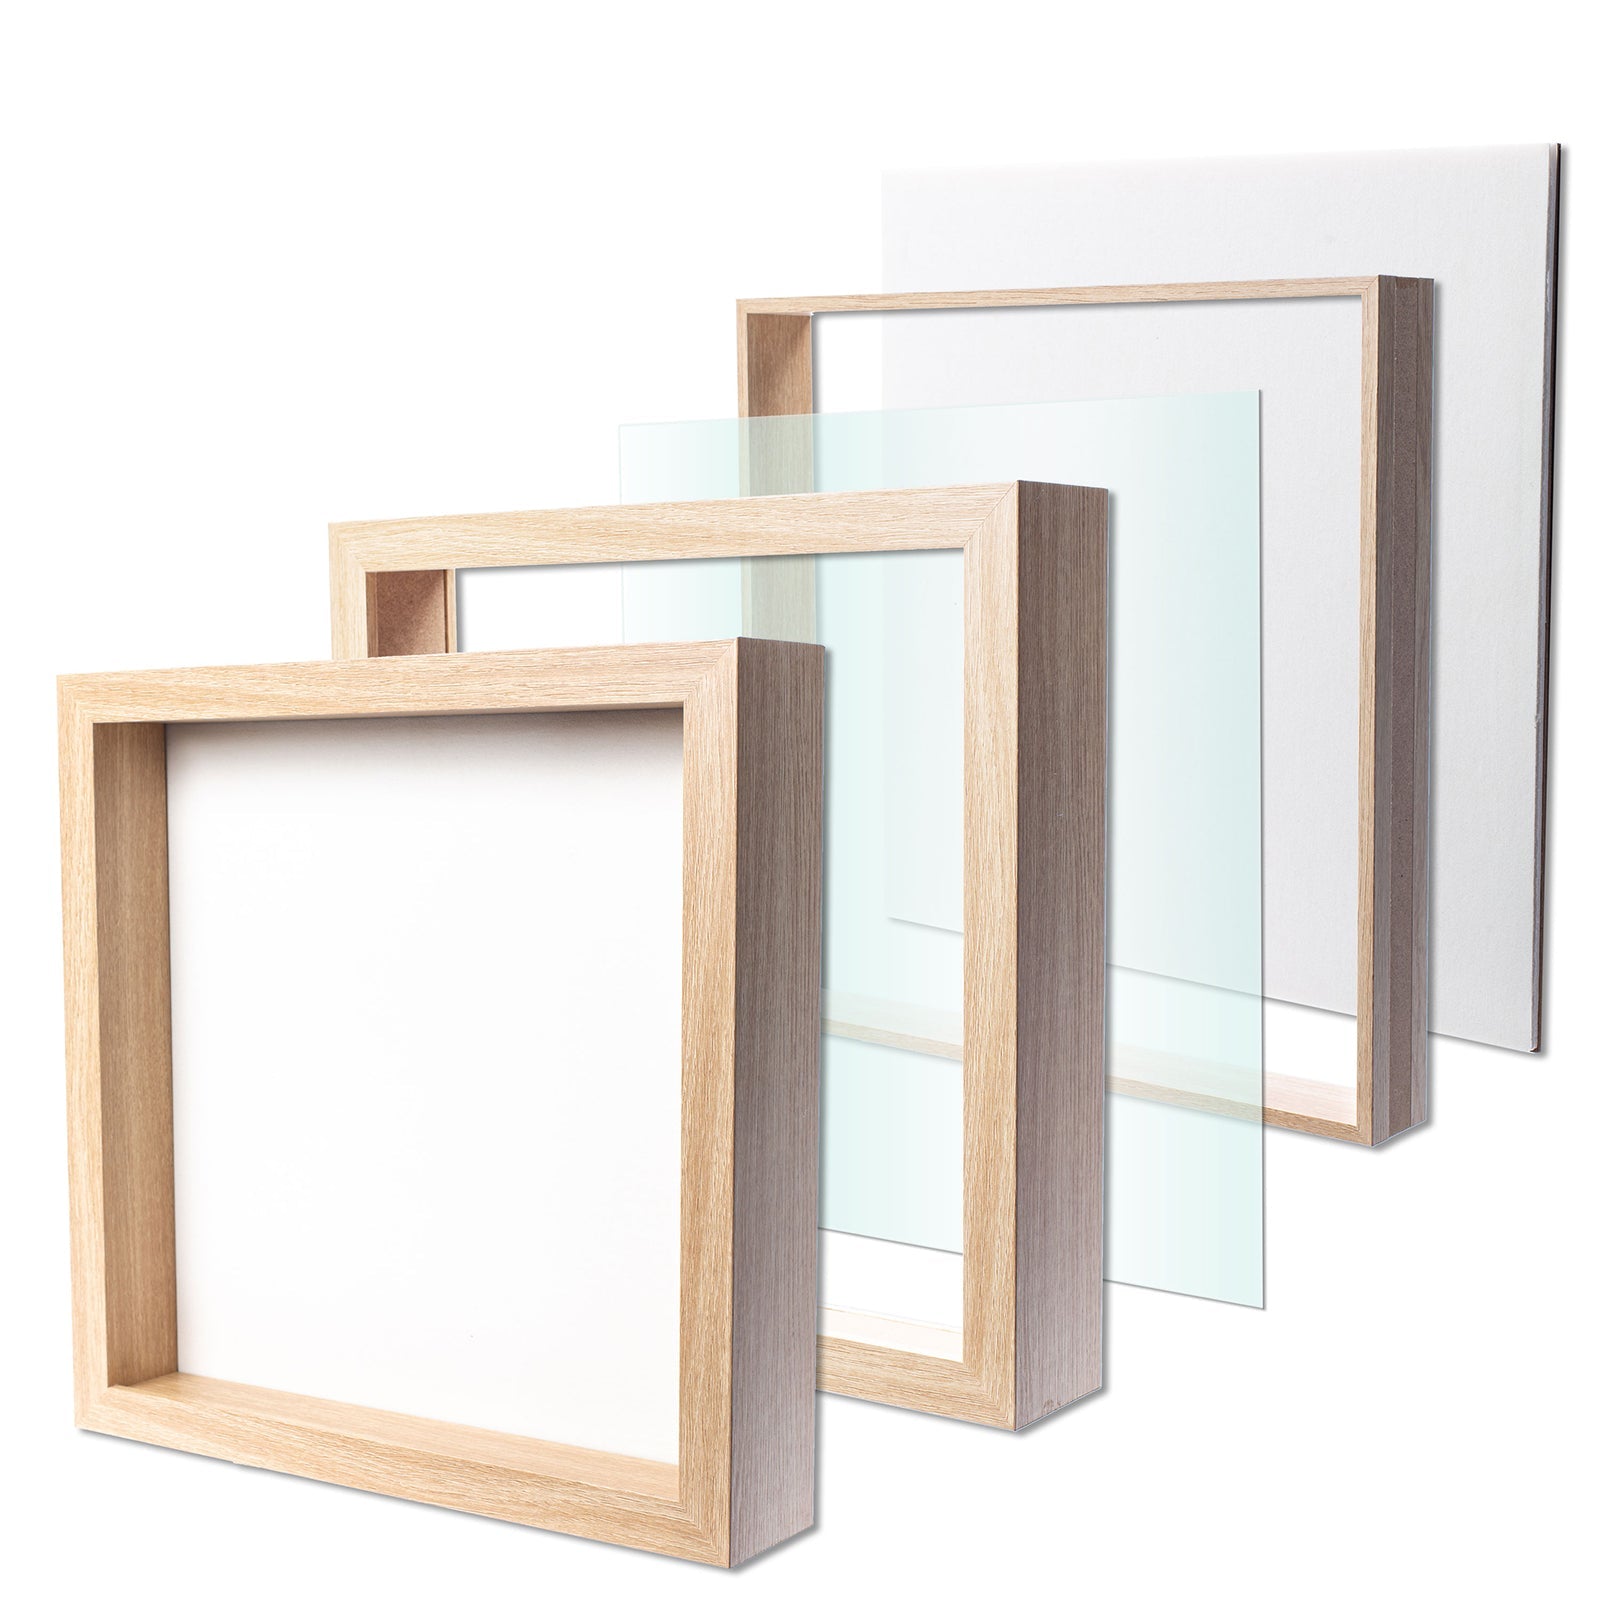 11" x 11” Natural Oak Wood Shadow Box Frame